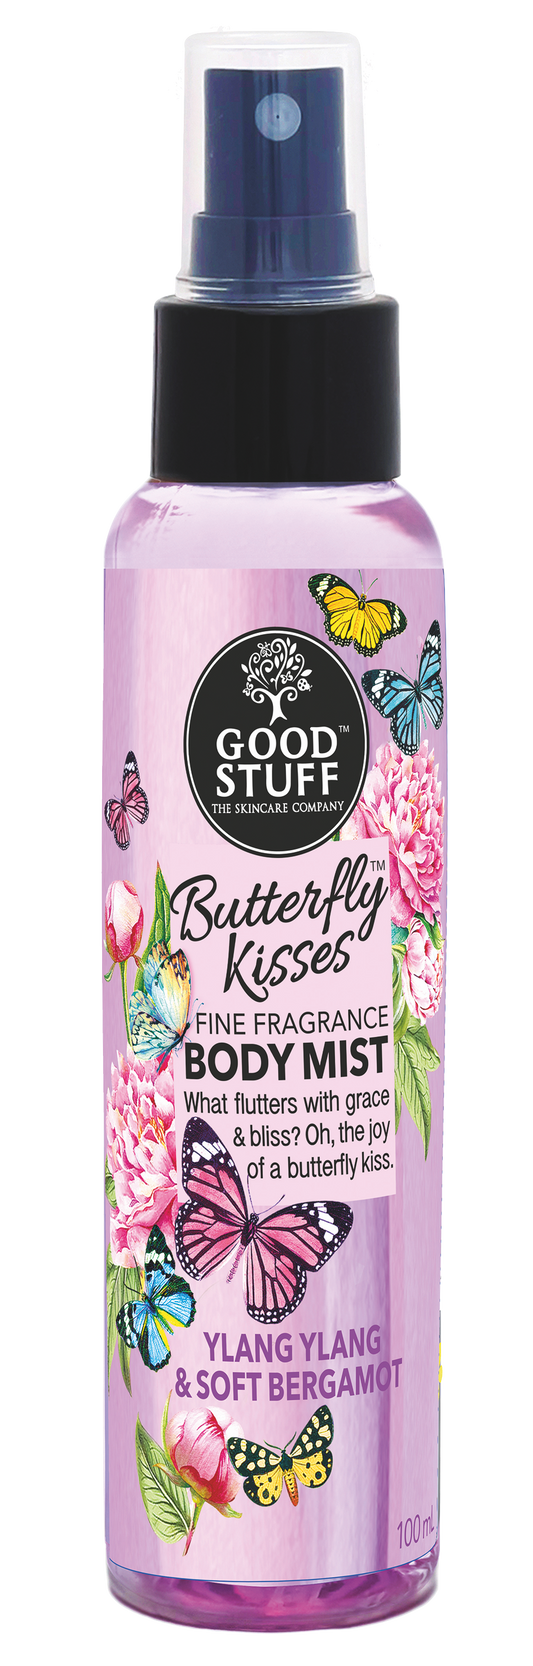 Body Mist - Good Stuff Butterfly Kisses